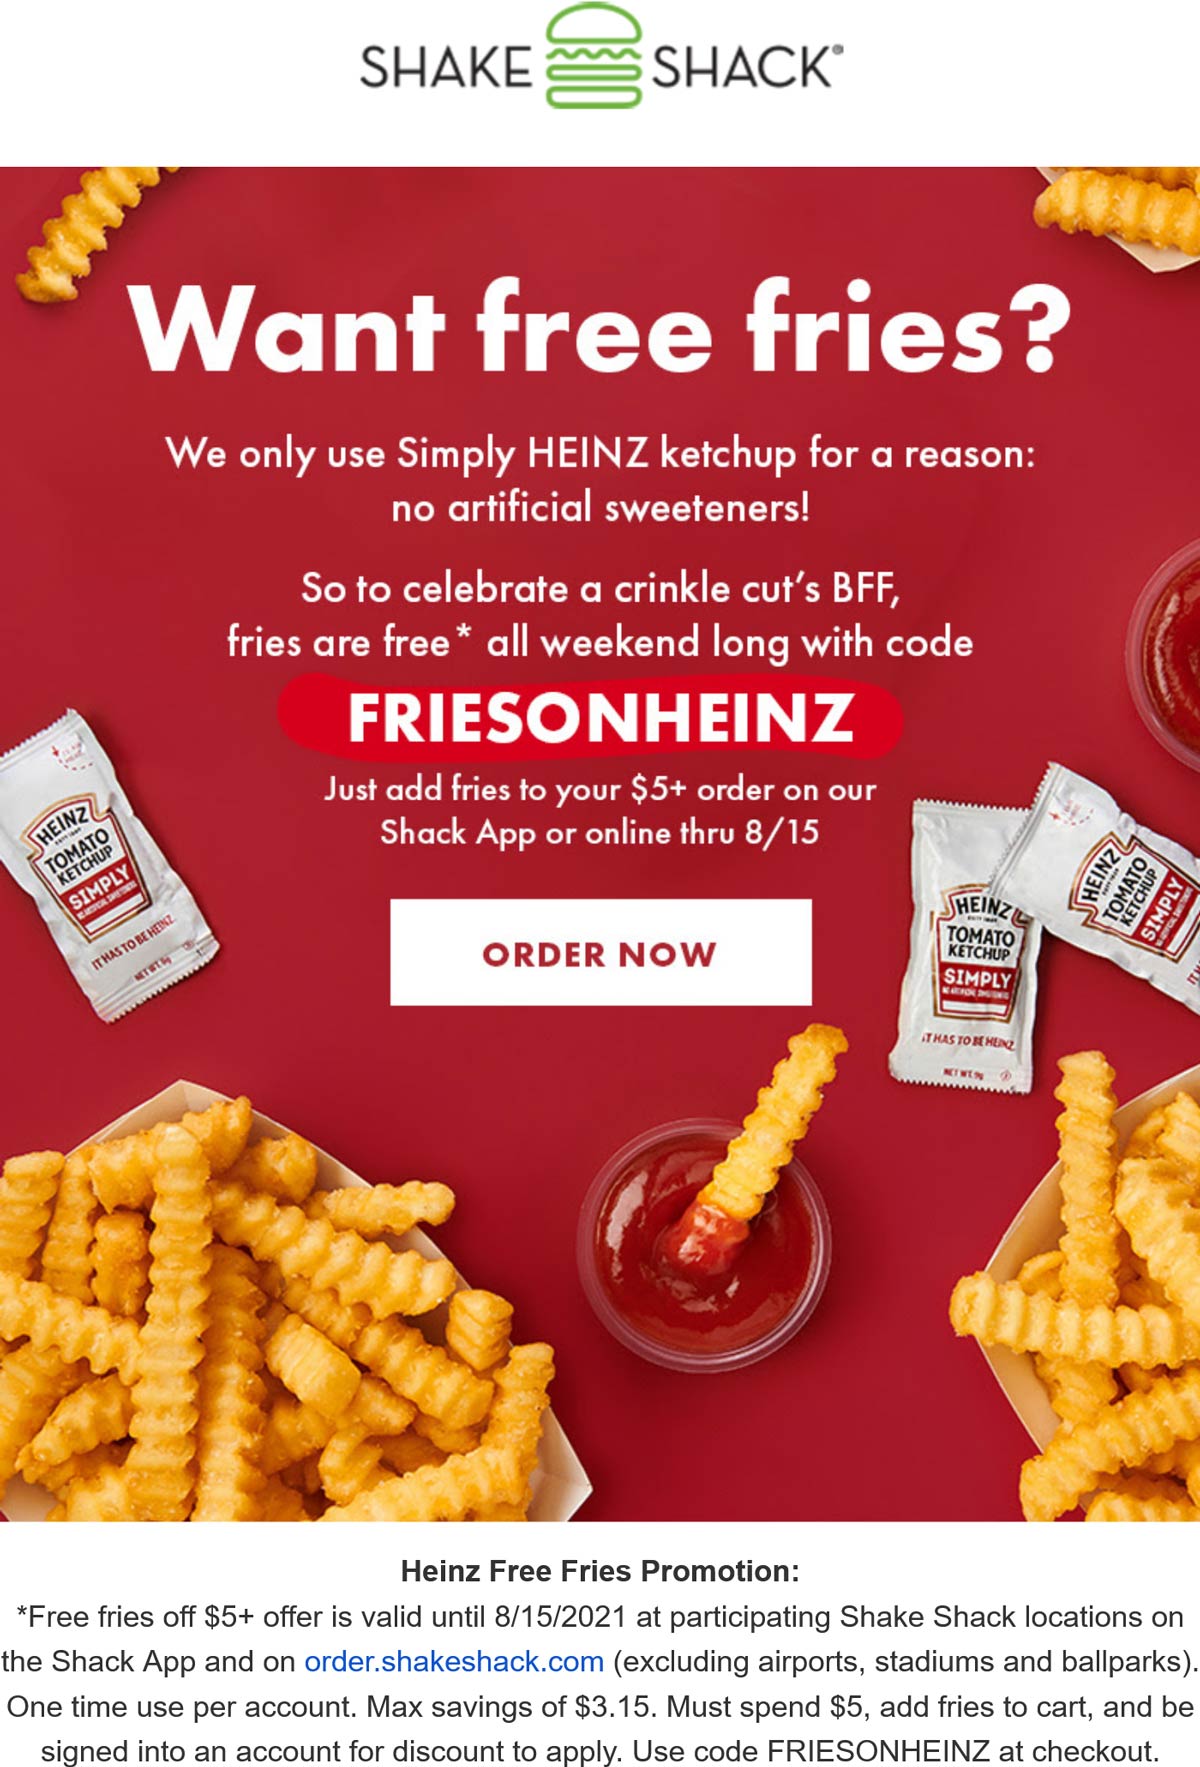 Shake Shack restaurants Coupon  Free fries with $5 spent at Shake Shack restaurants via promo code FRIESONHEINZ #shakeshack 